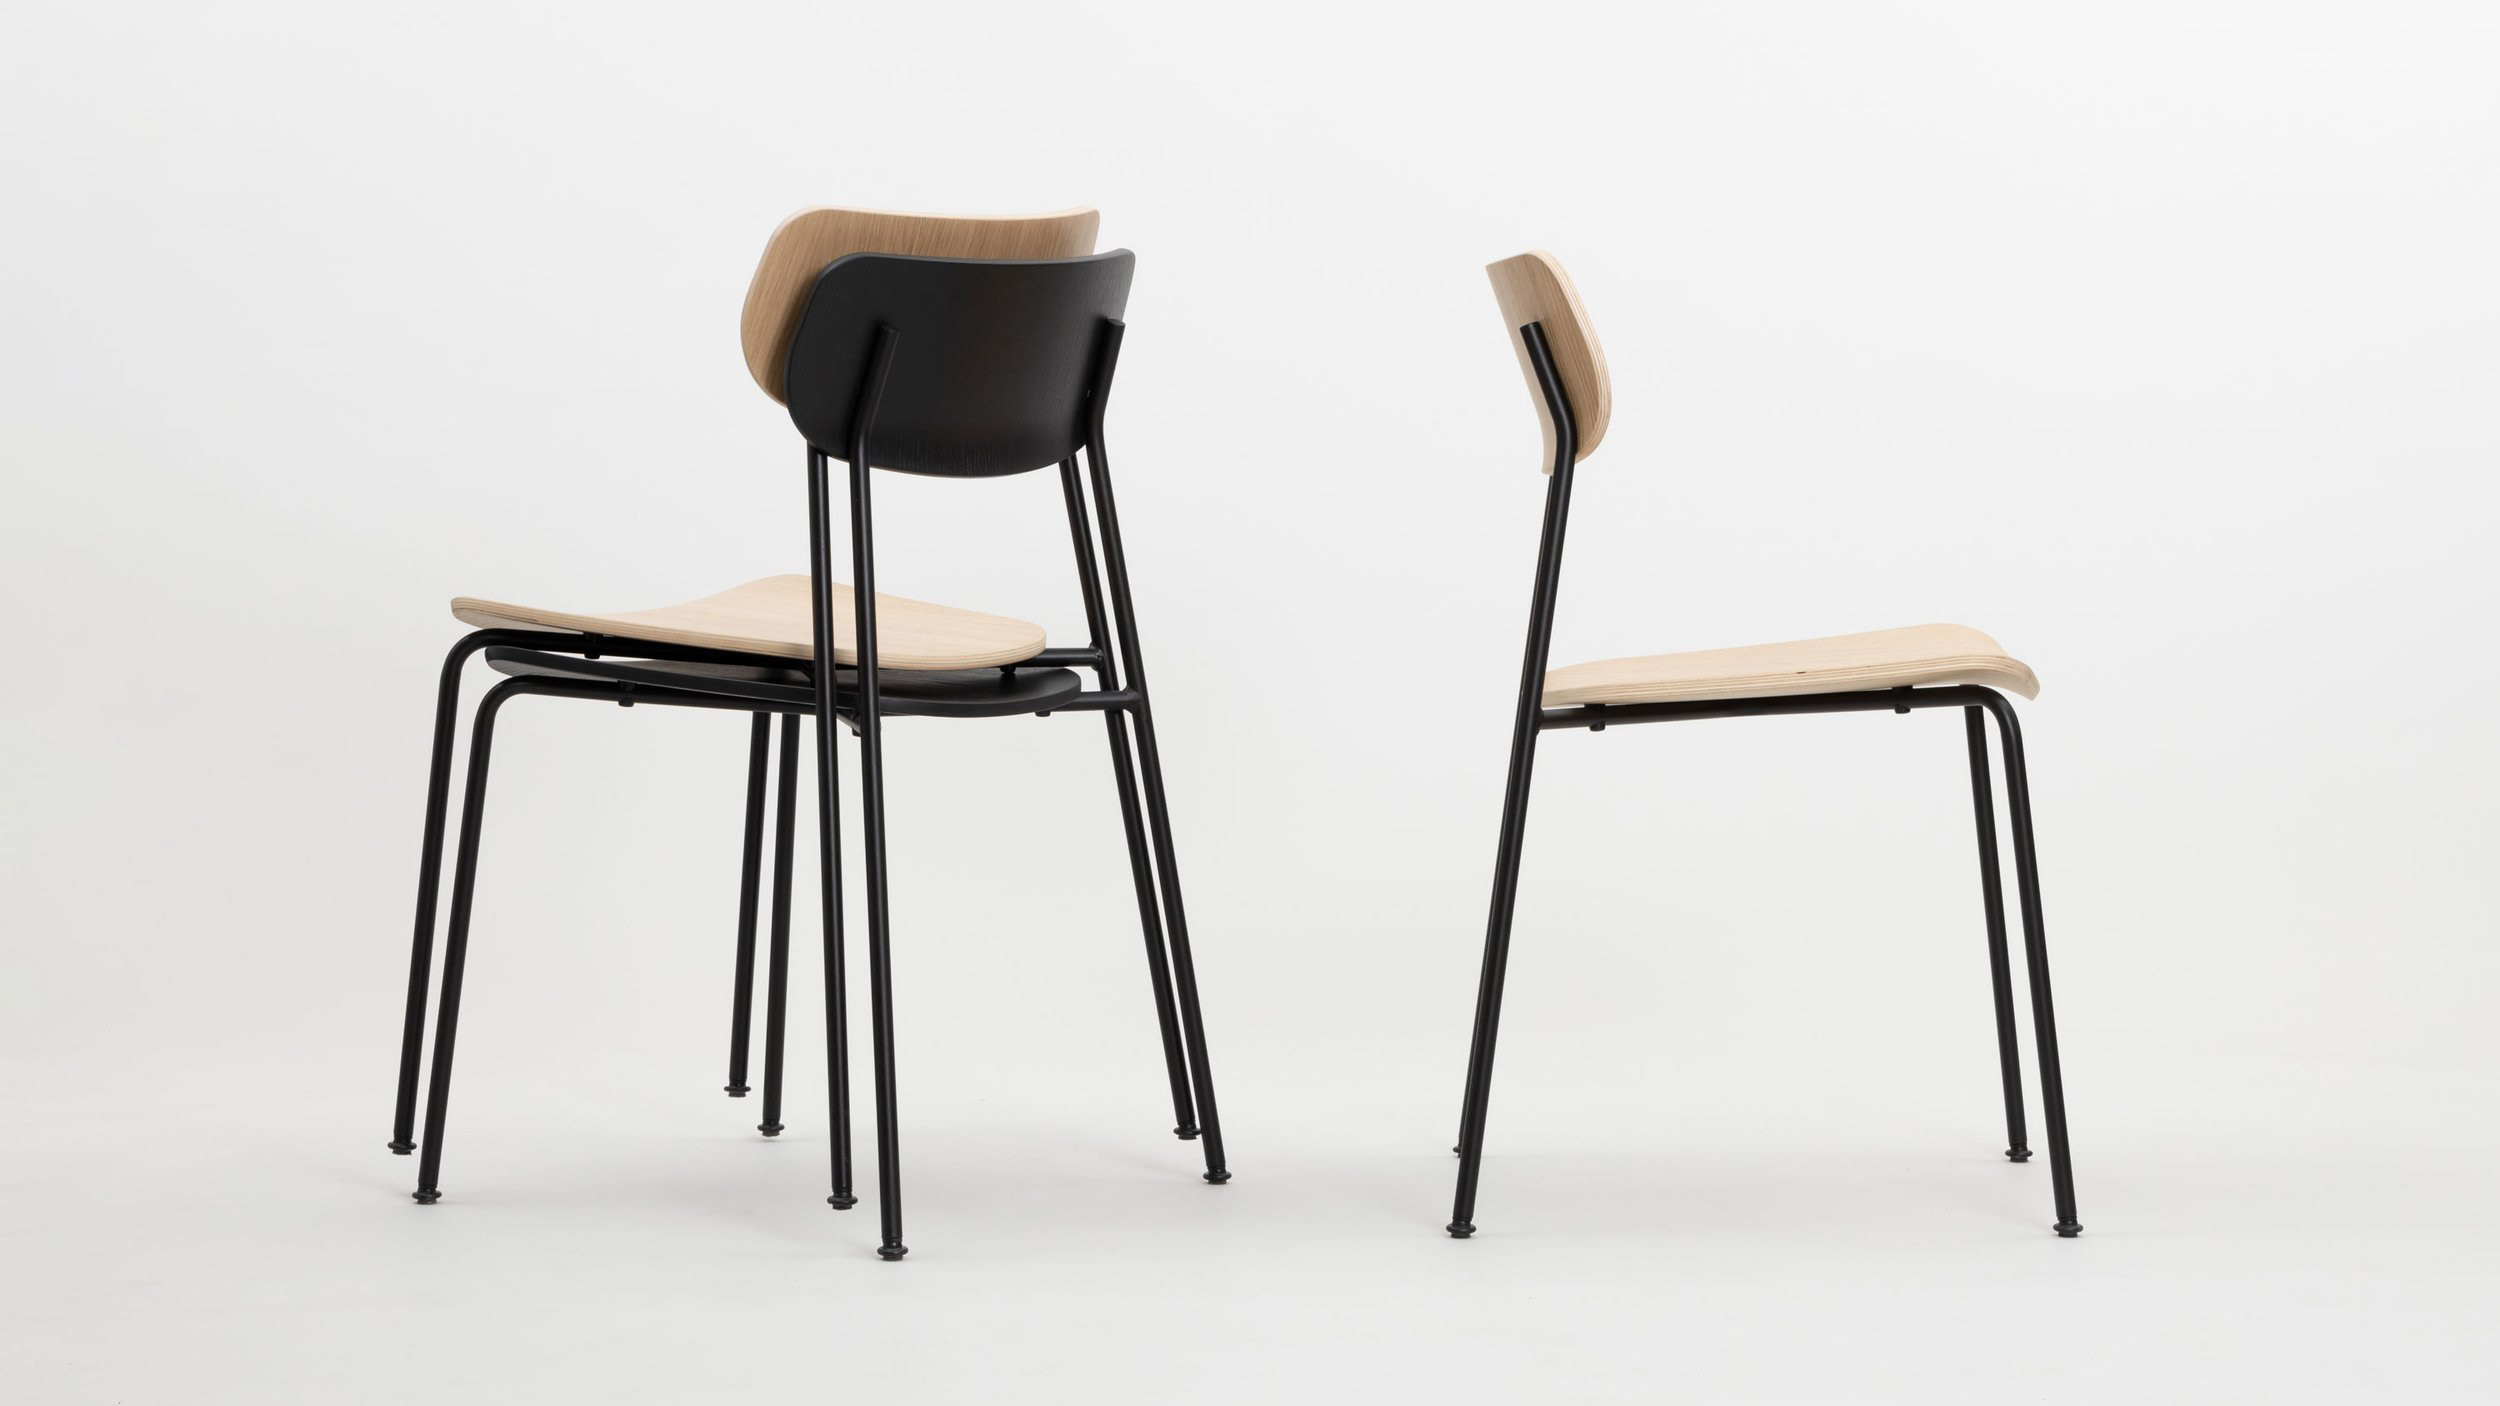 Three minimalist chairs